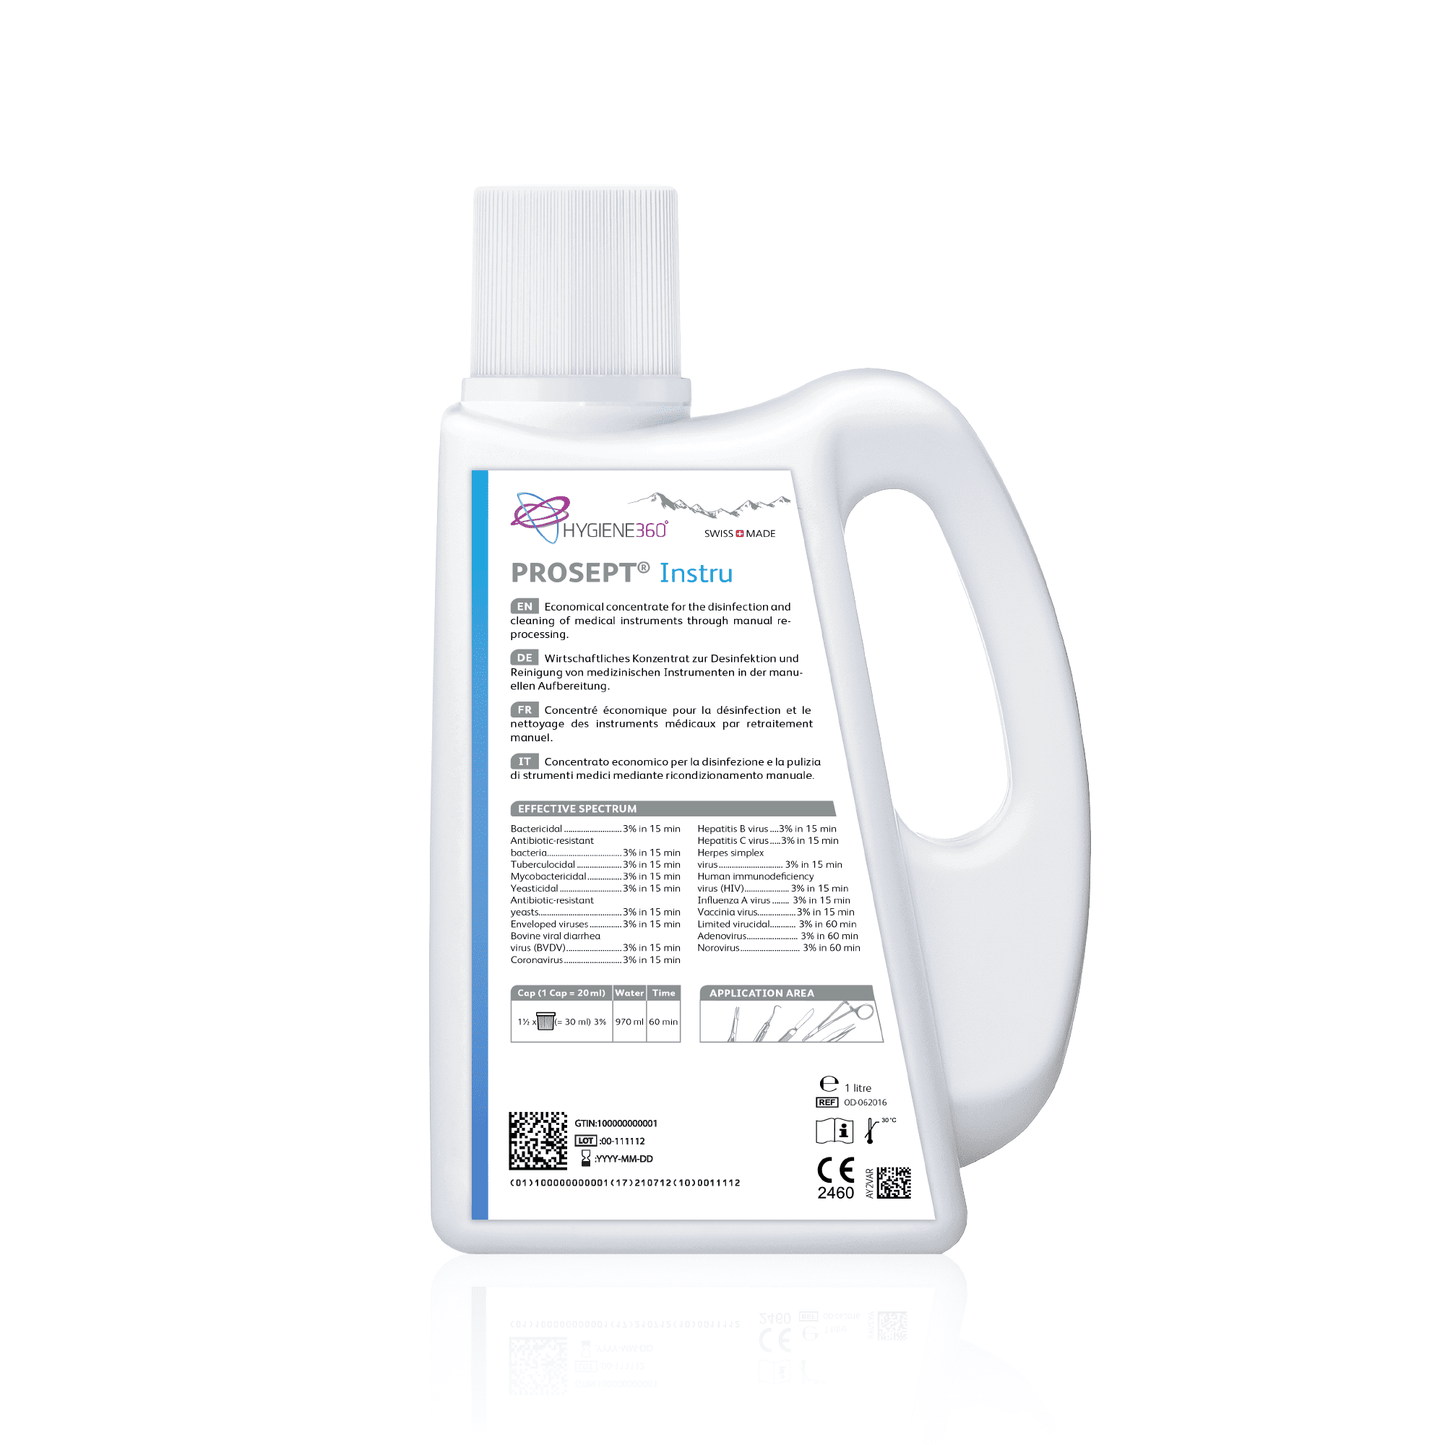 Concentrado desinfectante PROSEPT Fortis IInstru. 1 litro